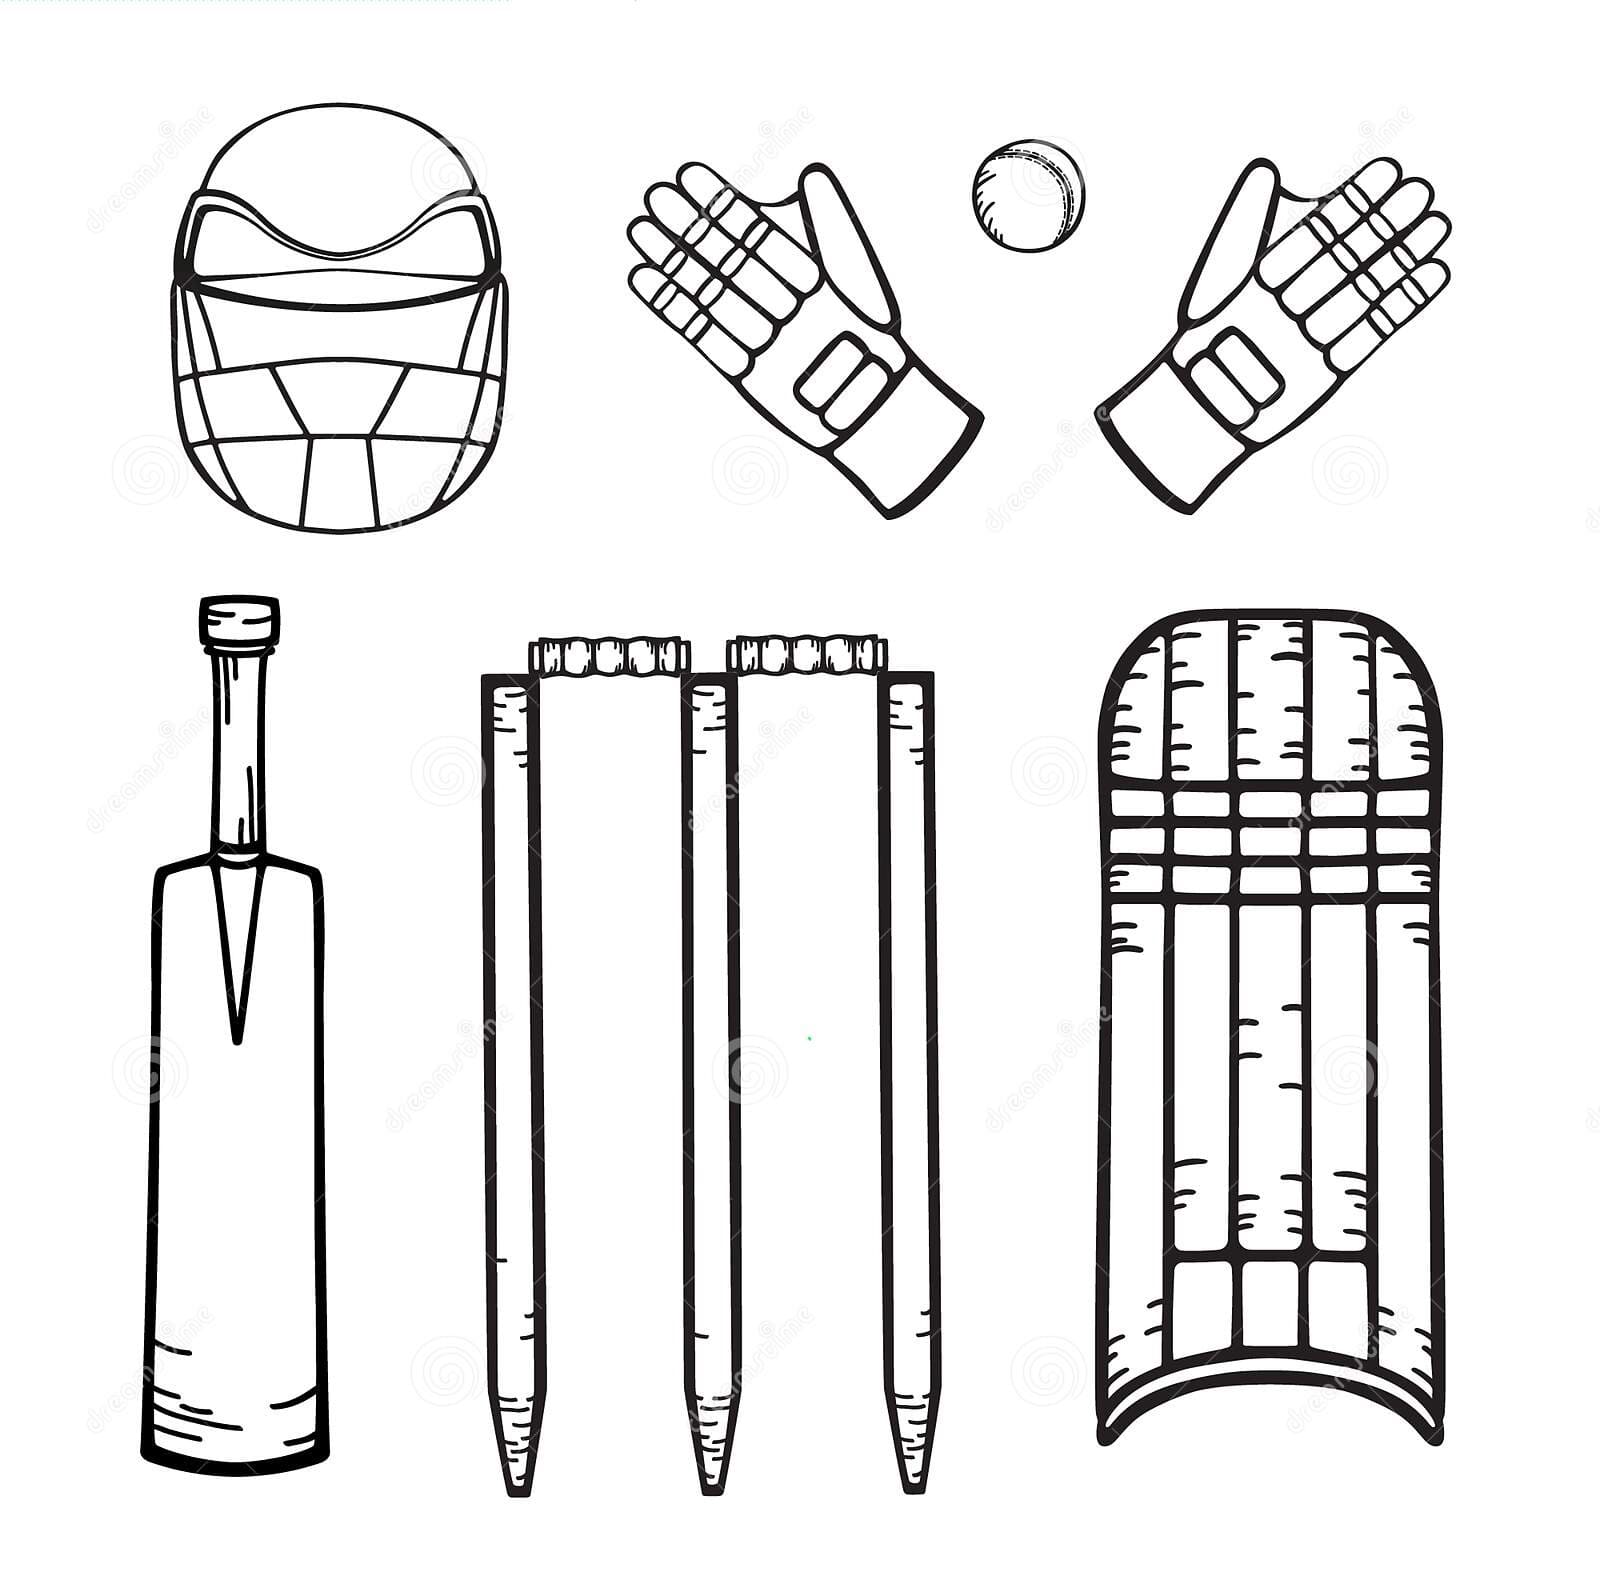 Cricket Equipment Image